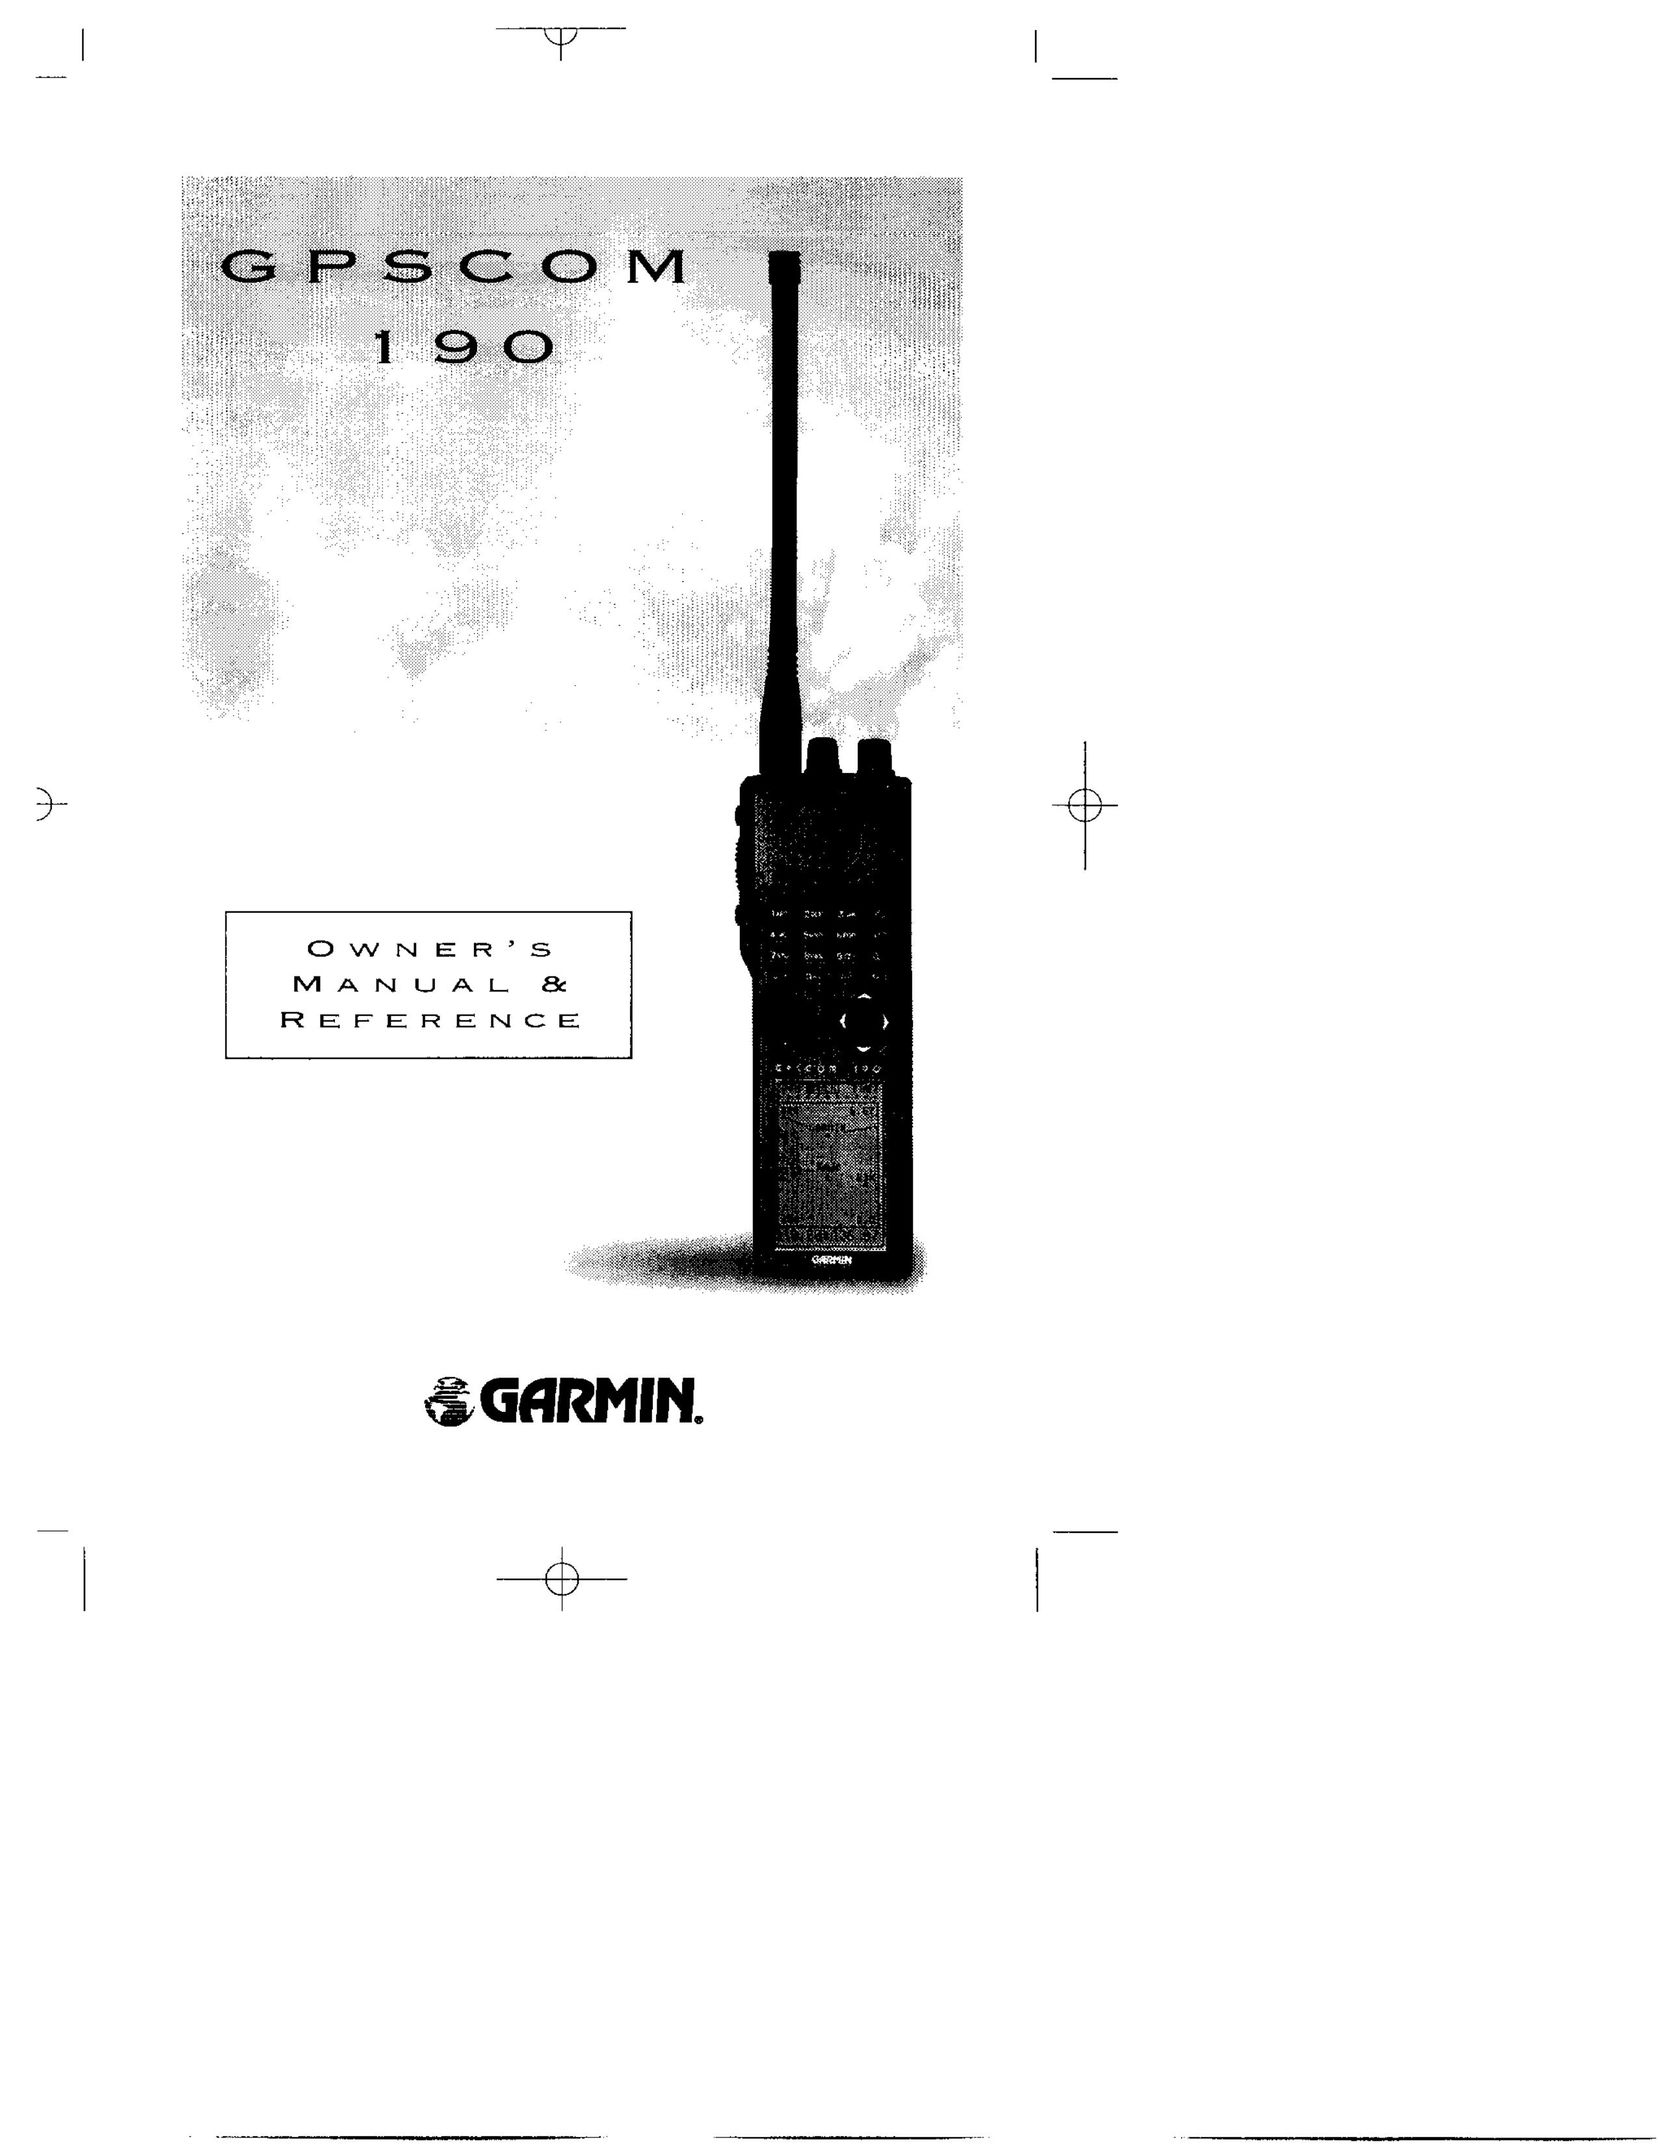 Garmin GPSCOM 190 Two-Way Radio User Manual